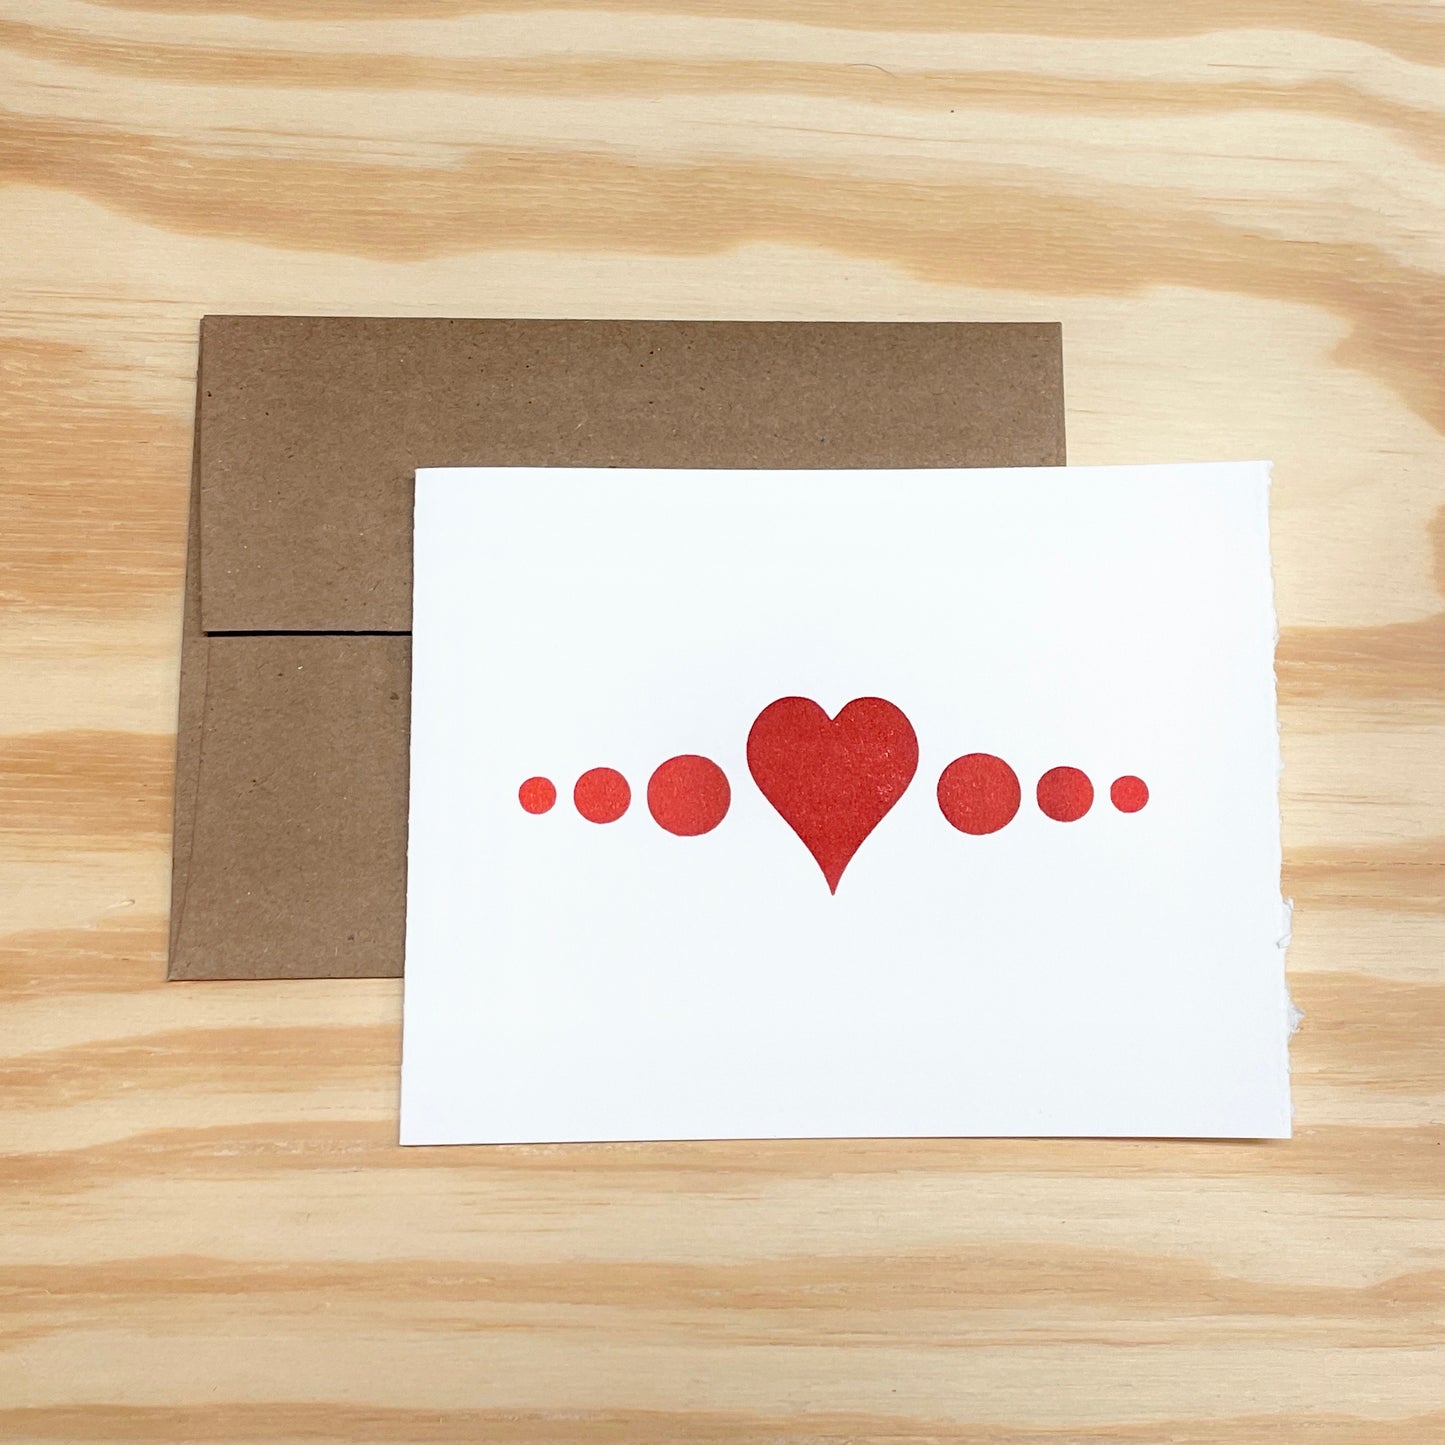 Heart Dots - single card - wood type letterpress printed